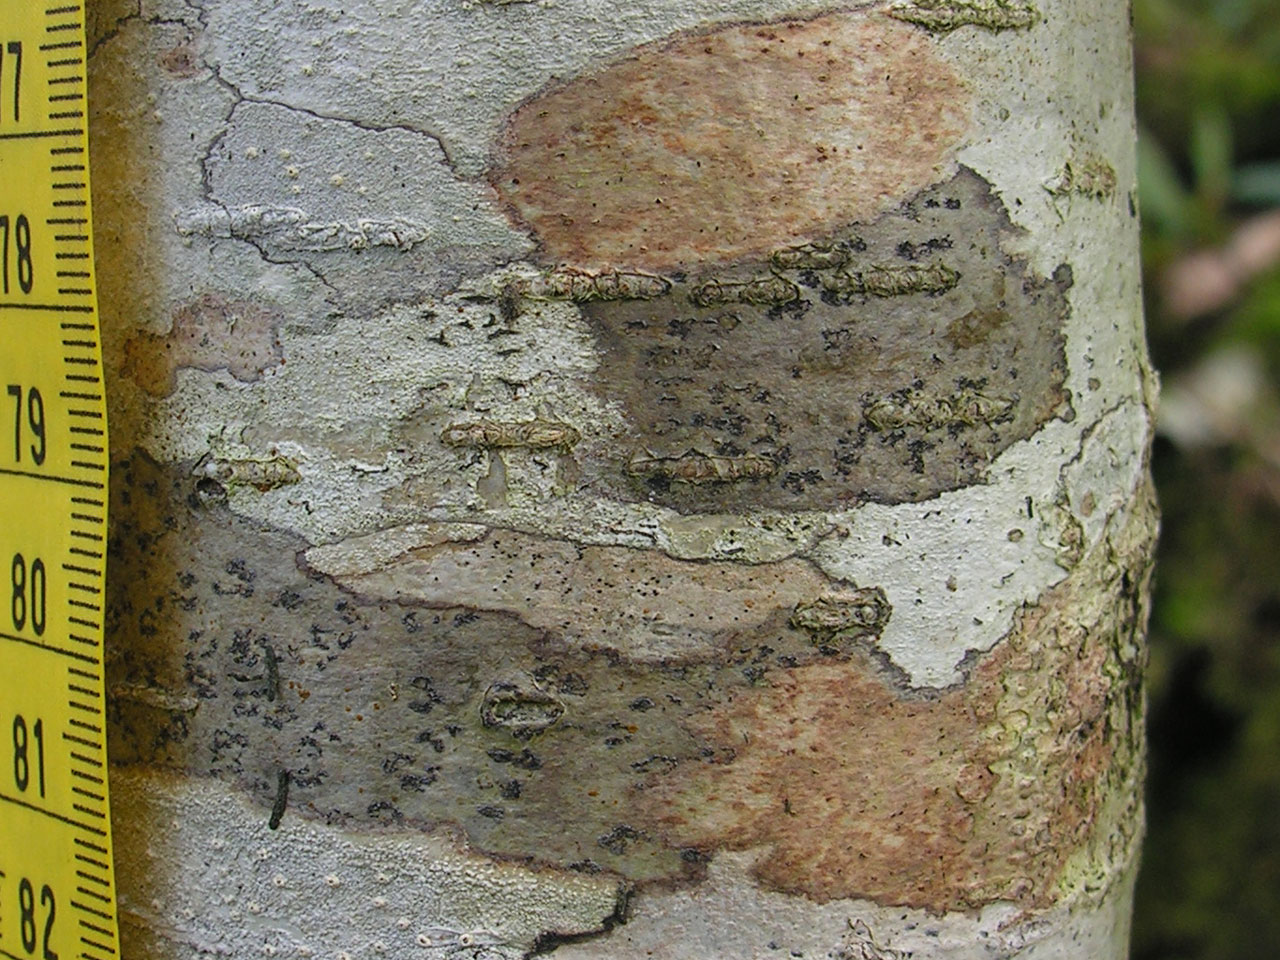 Arthothelium ruanum (dark thallus), Hazel, Ceunant Llennyrch, Meirionnydd